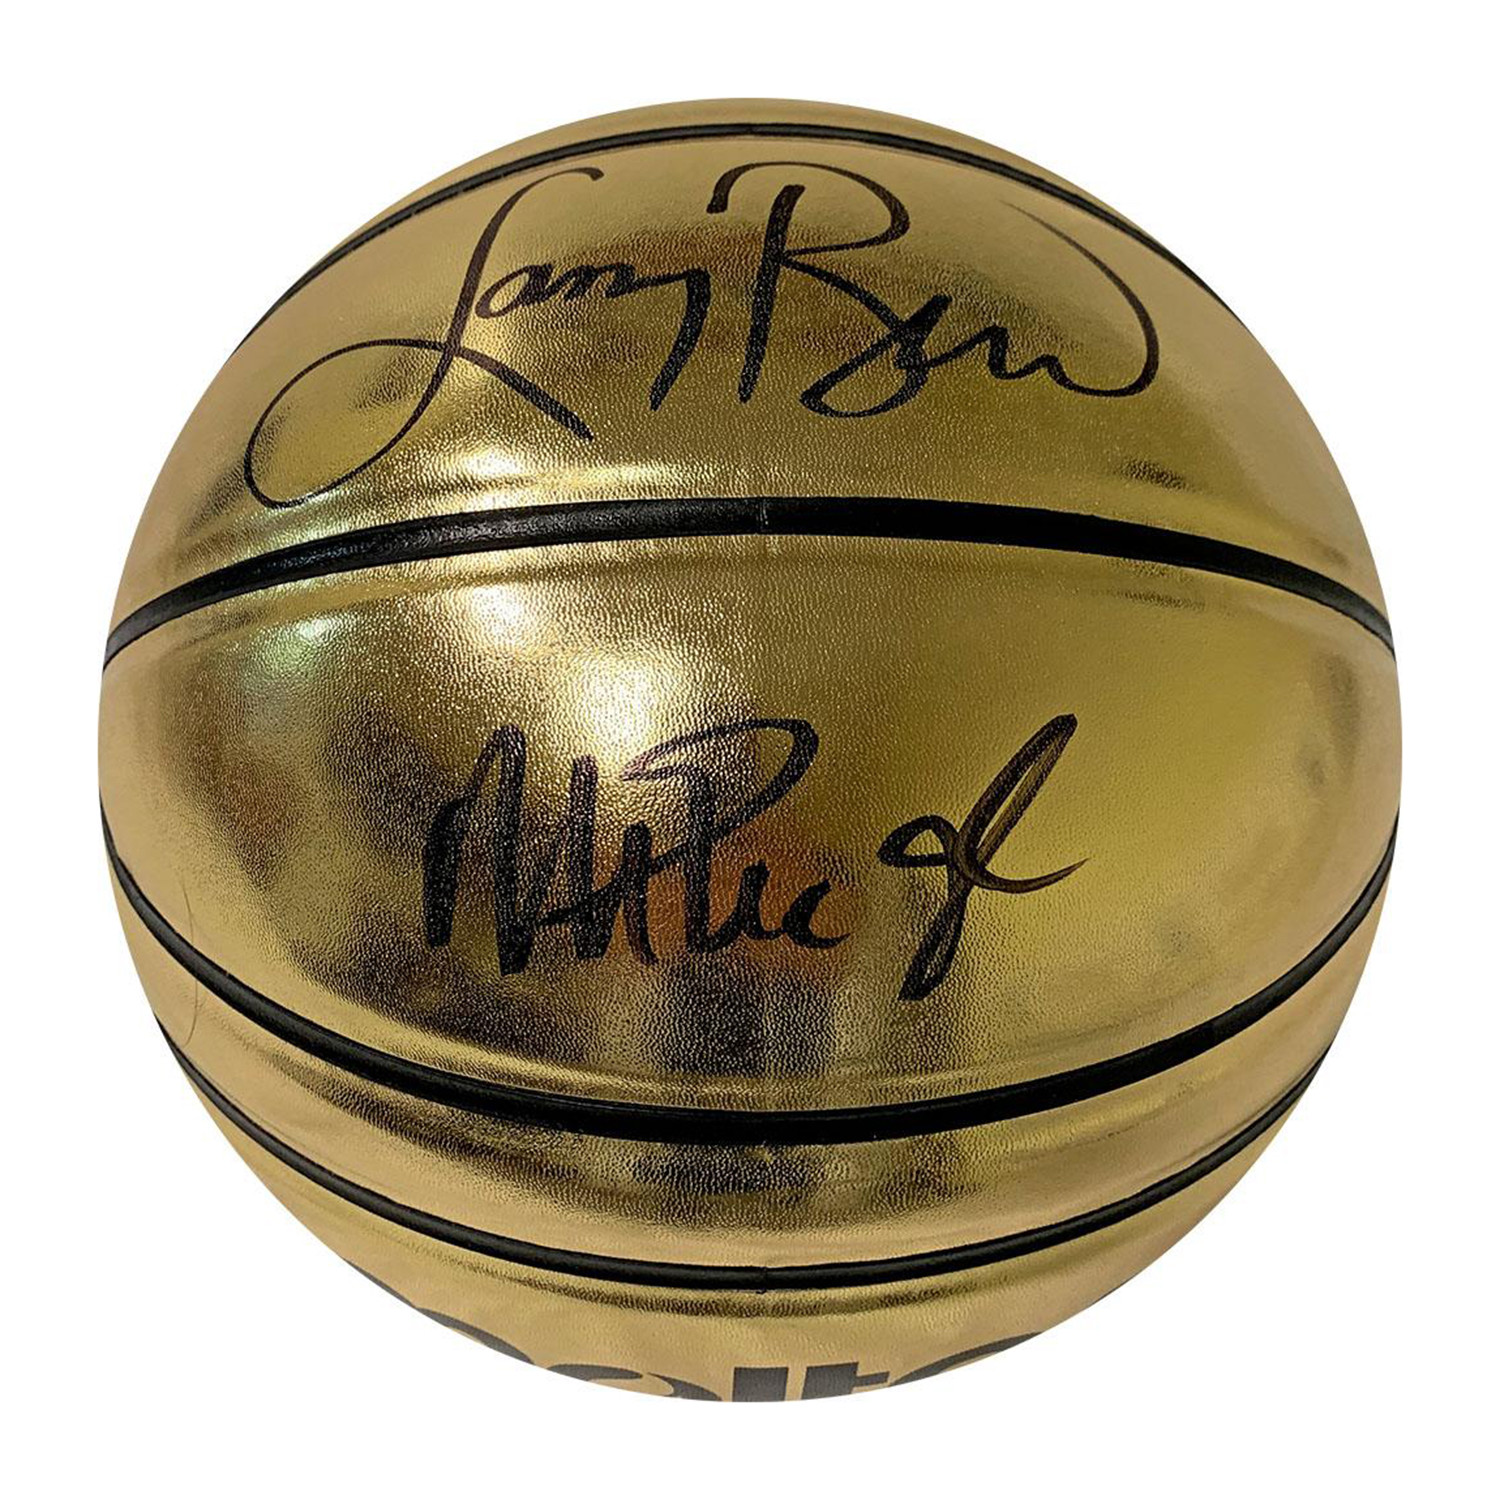 Autographed Magic Johnson NBA Basketballs, Autographed Basketballs